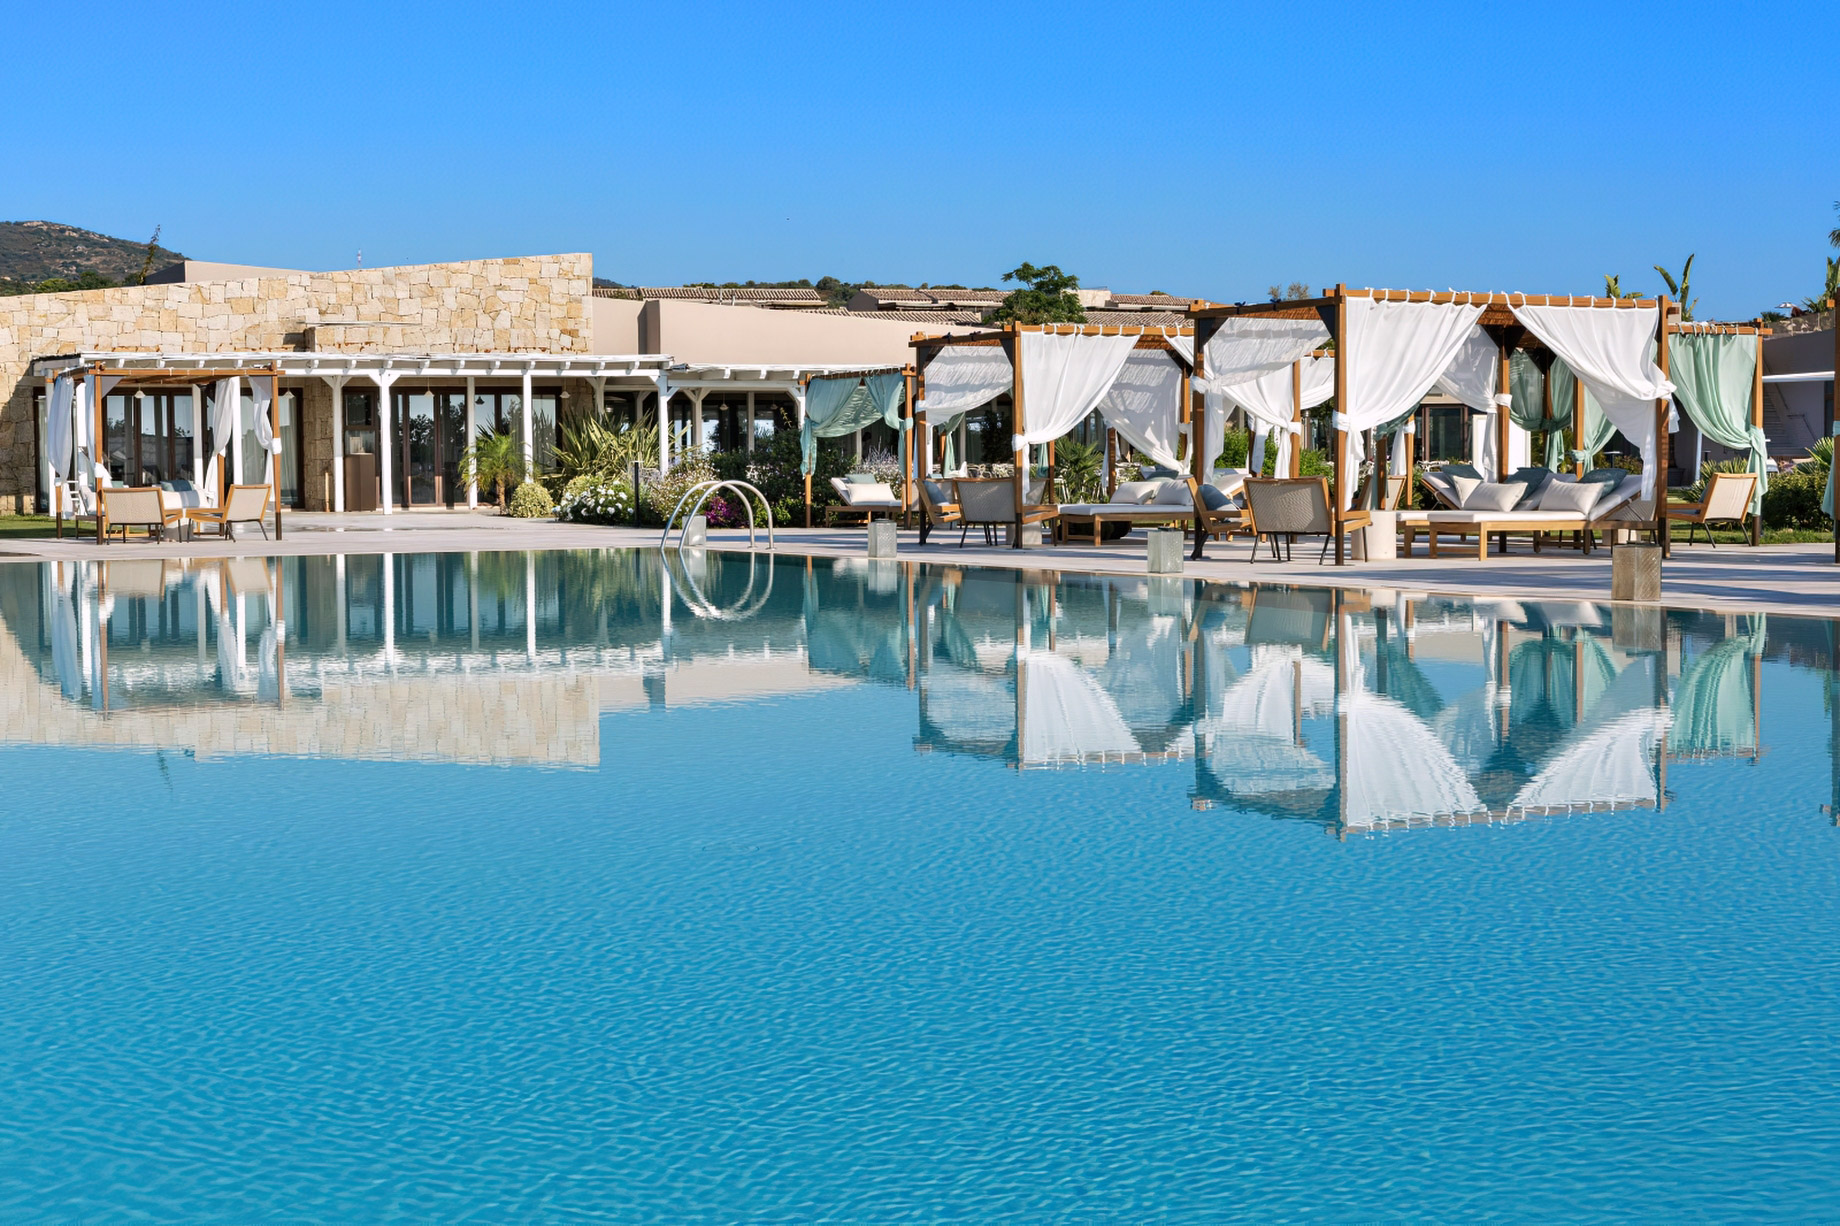 Baglioni Resort Sardinia - San Teodoro, Sardegna, Italy - Pool